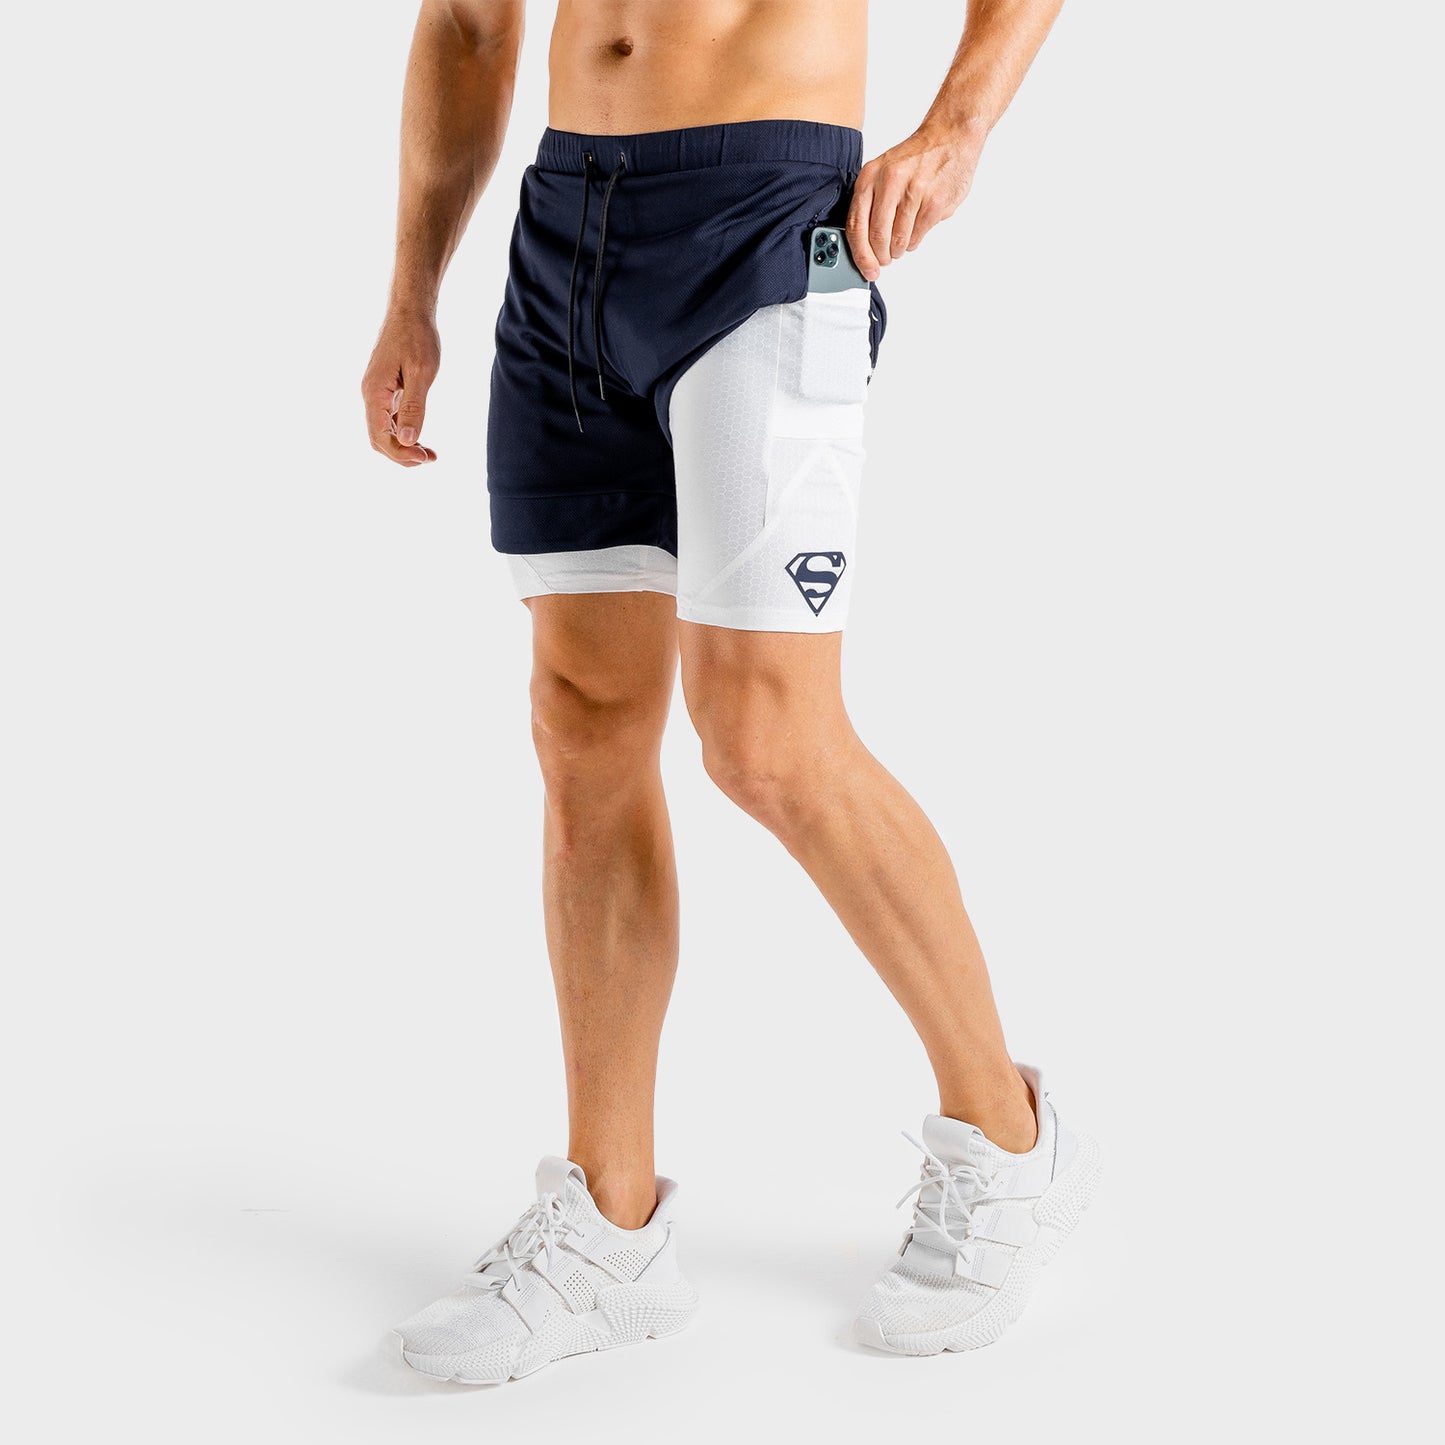 squatwolf-workout-short-for-men-superman-gym-shorts-blue-gym-wear